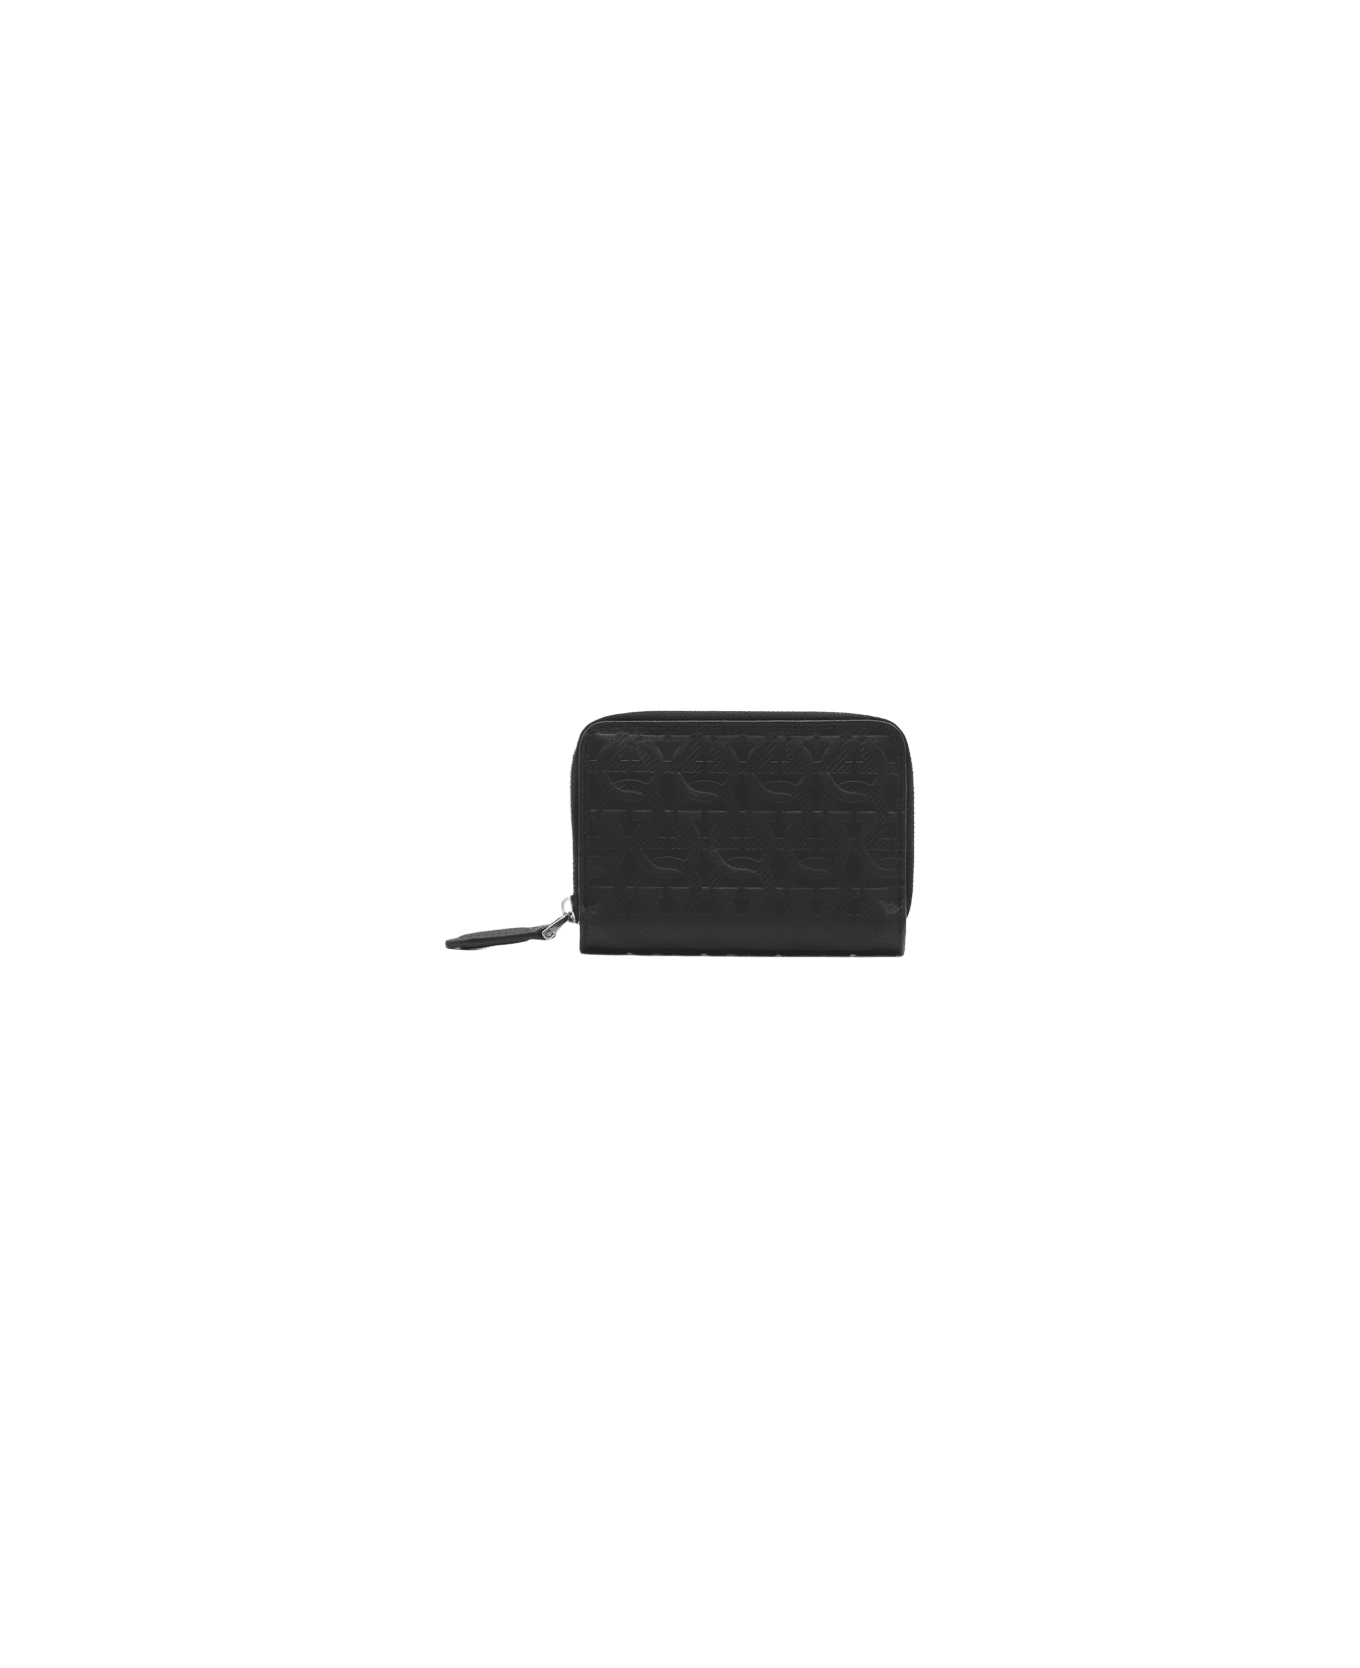 Ferragamo Leather Wallet With Gancini Pattern - Black 財布